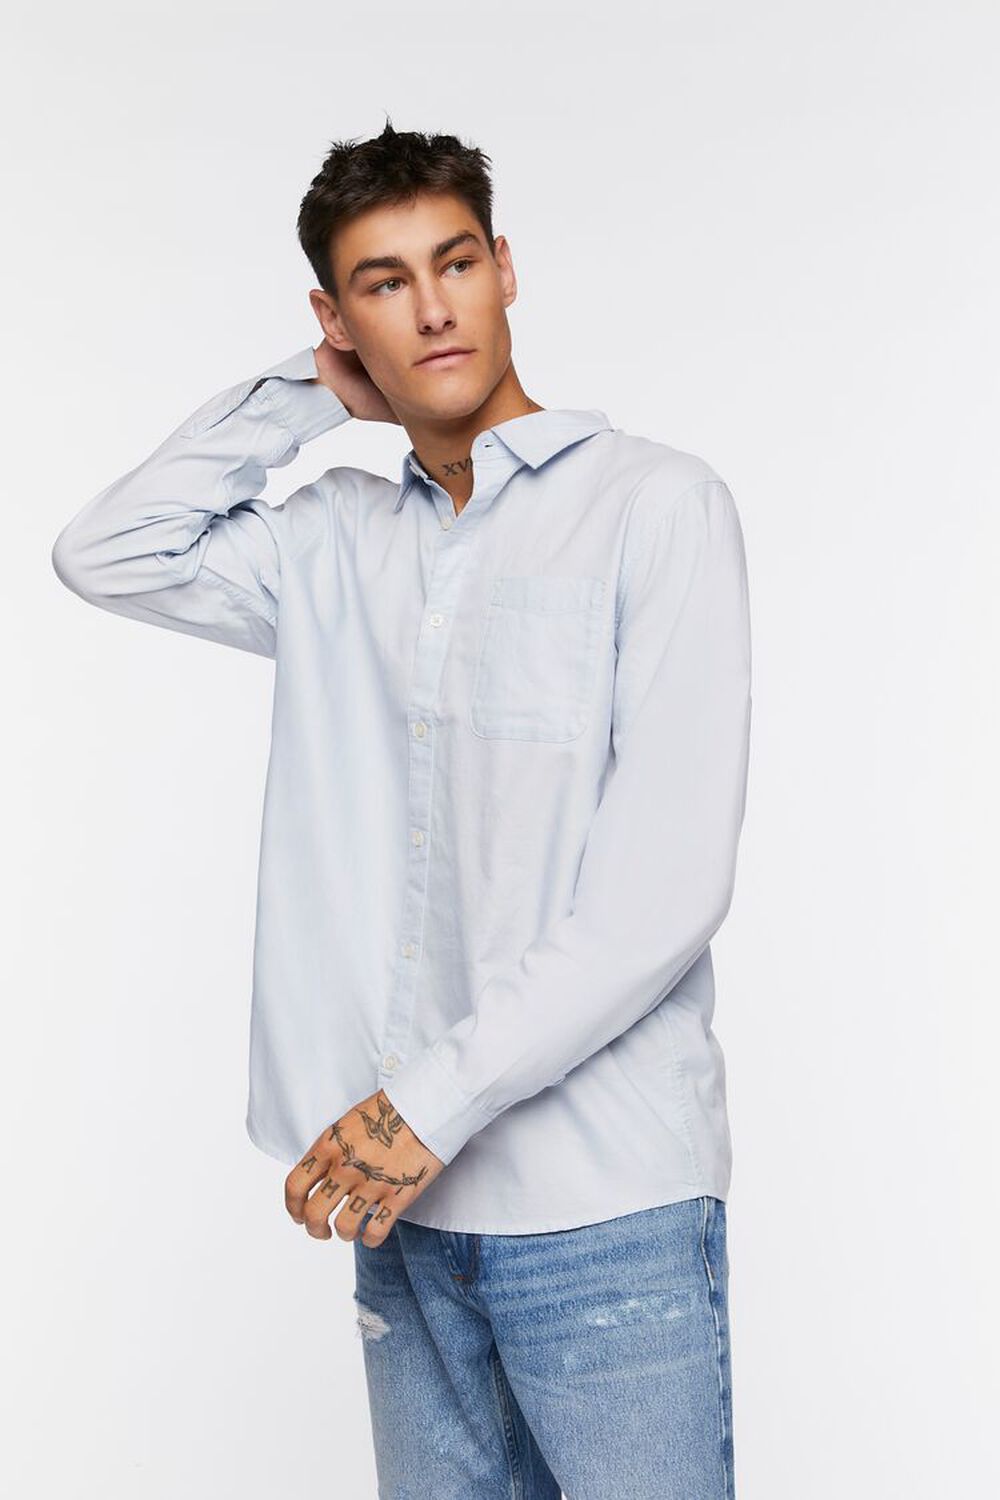 LIGHT BLUE Cotton Button-Up Shirt, image 1